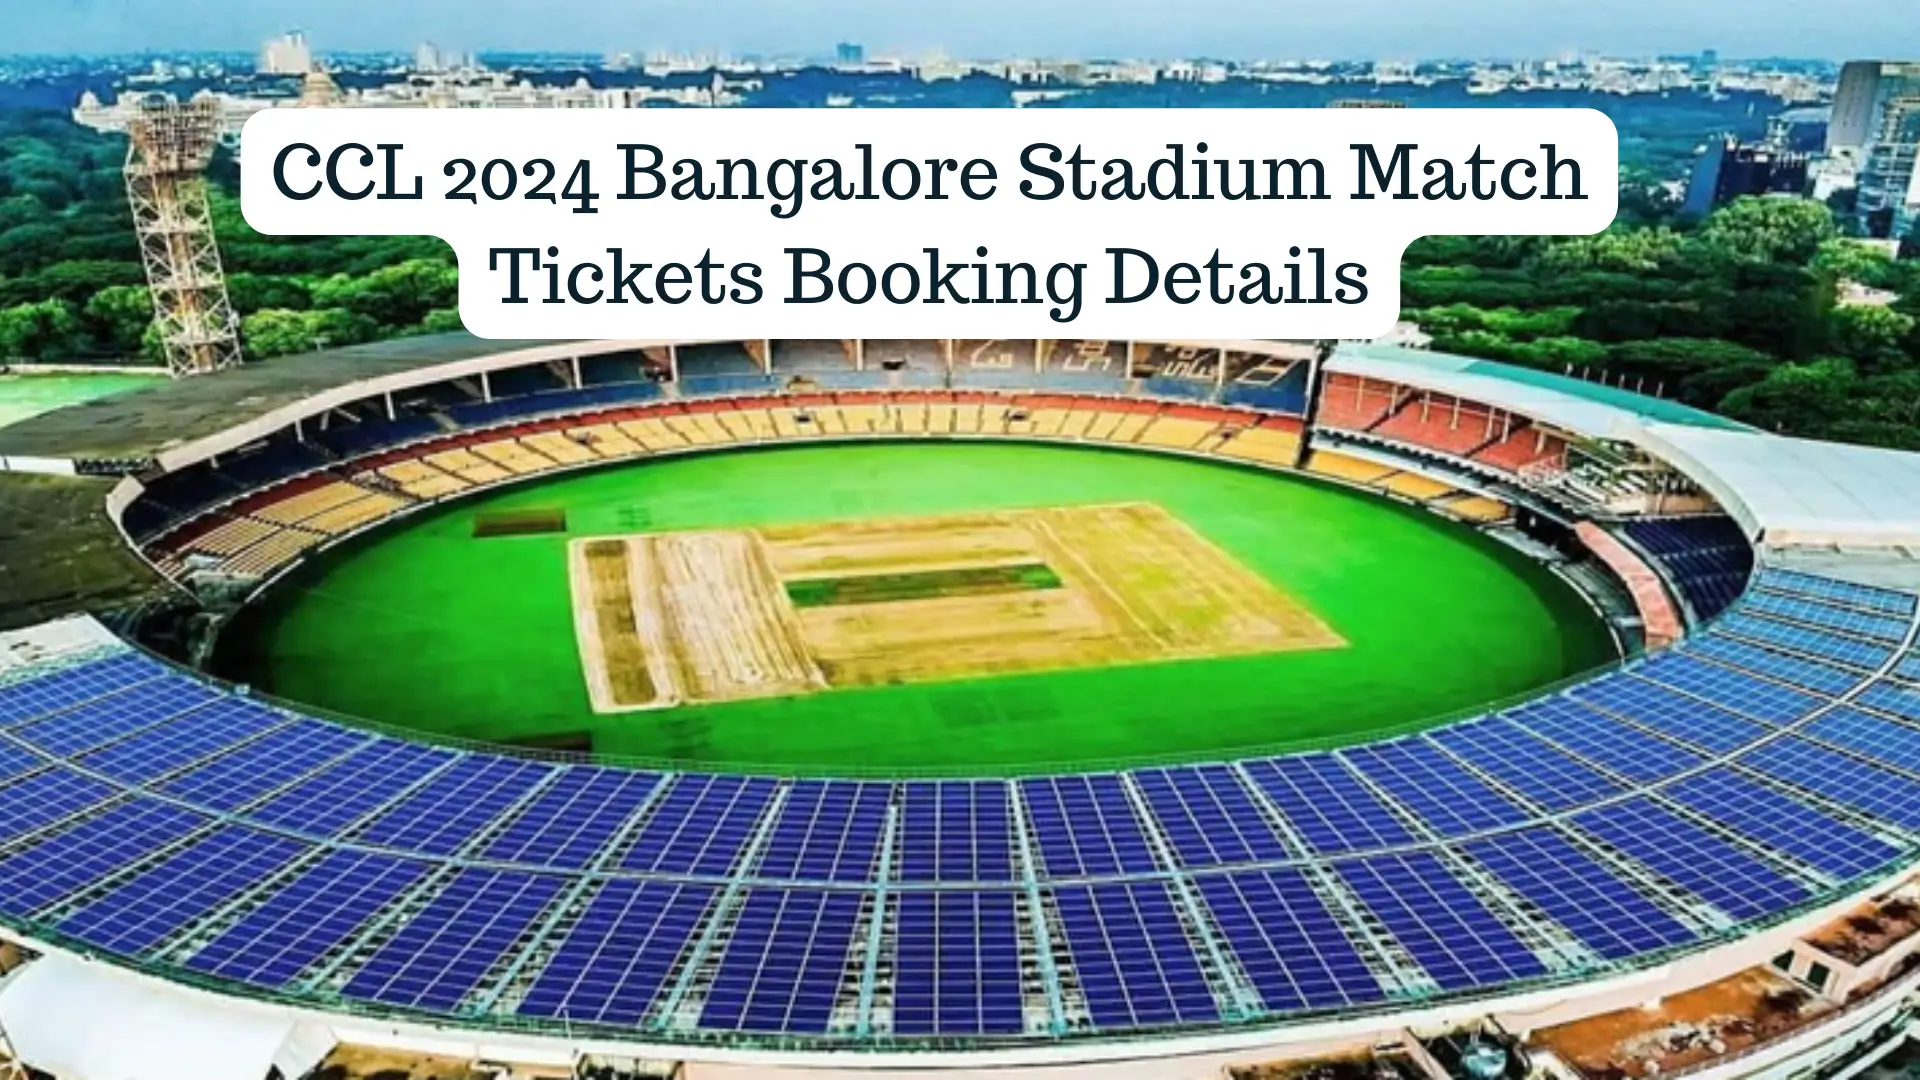 CCL 2024 Bangalore Stadium Match Tickets Booking Details